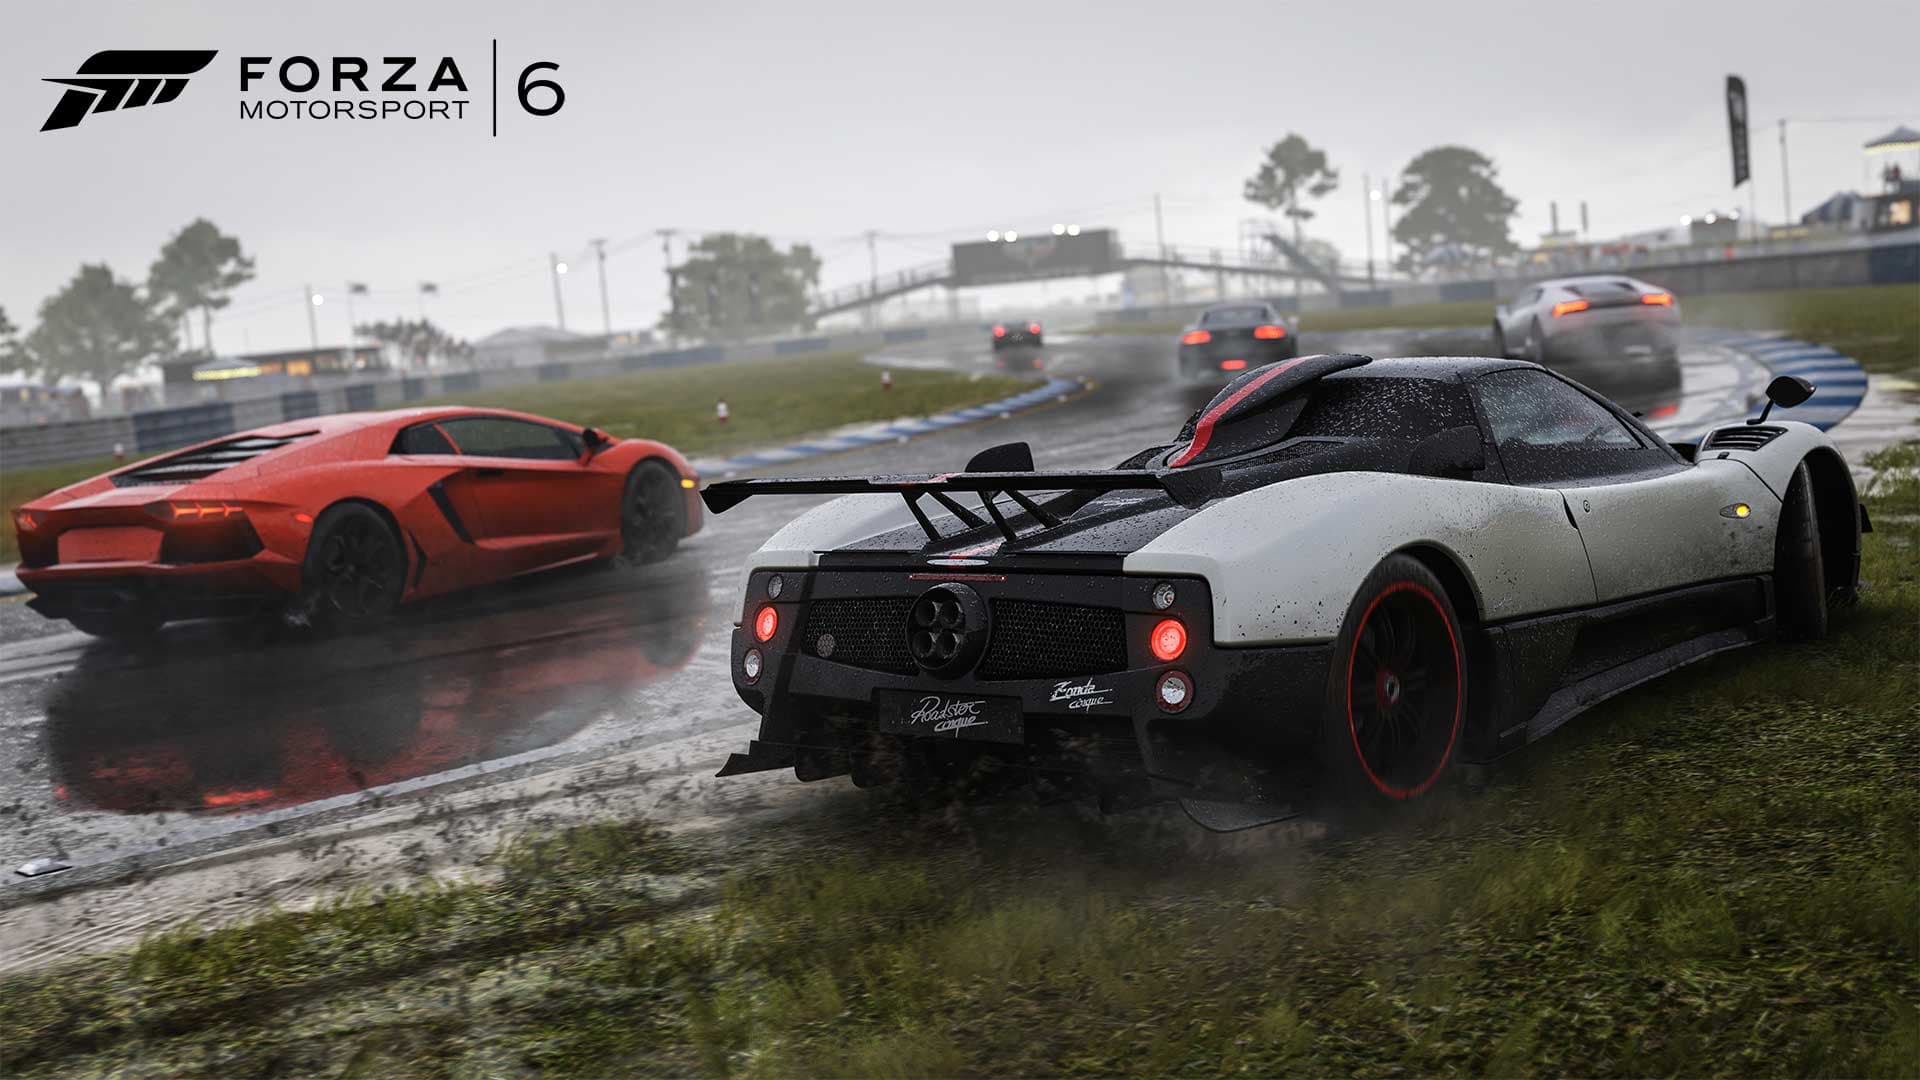 Forza Motorsport 6 is a Digital Dominatrix